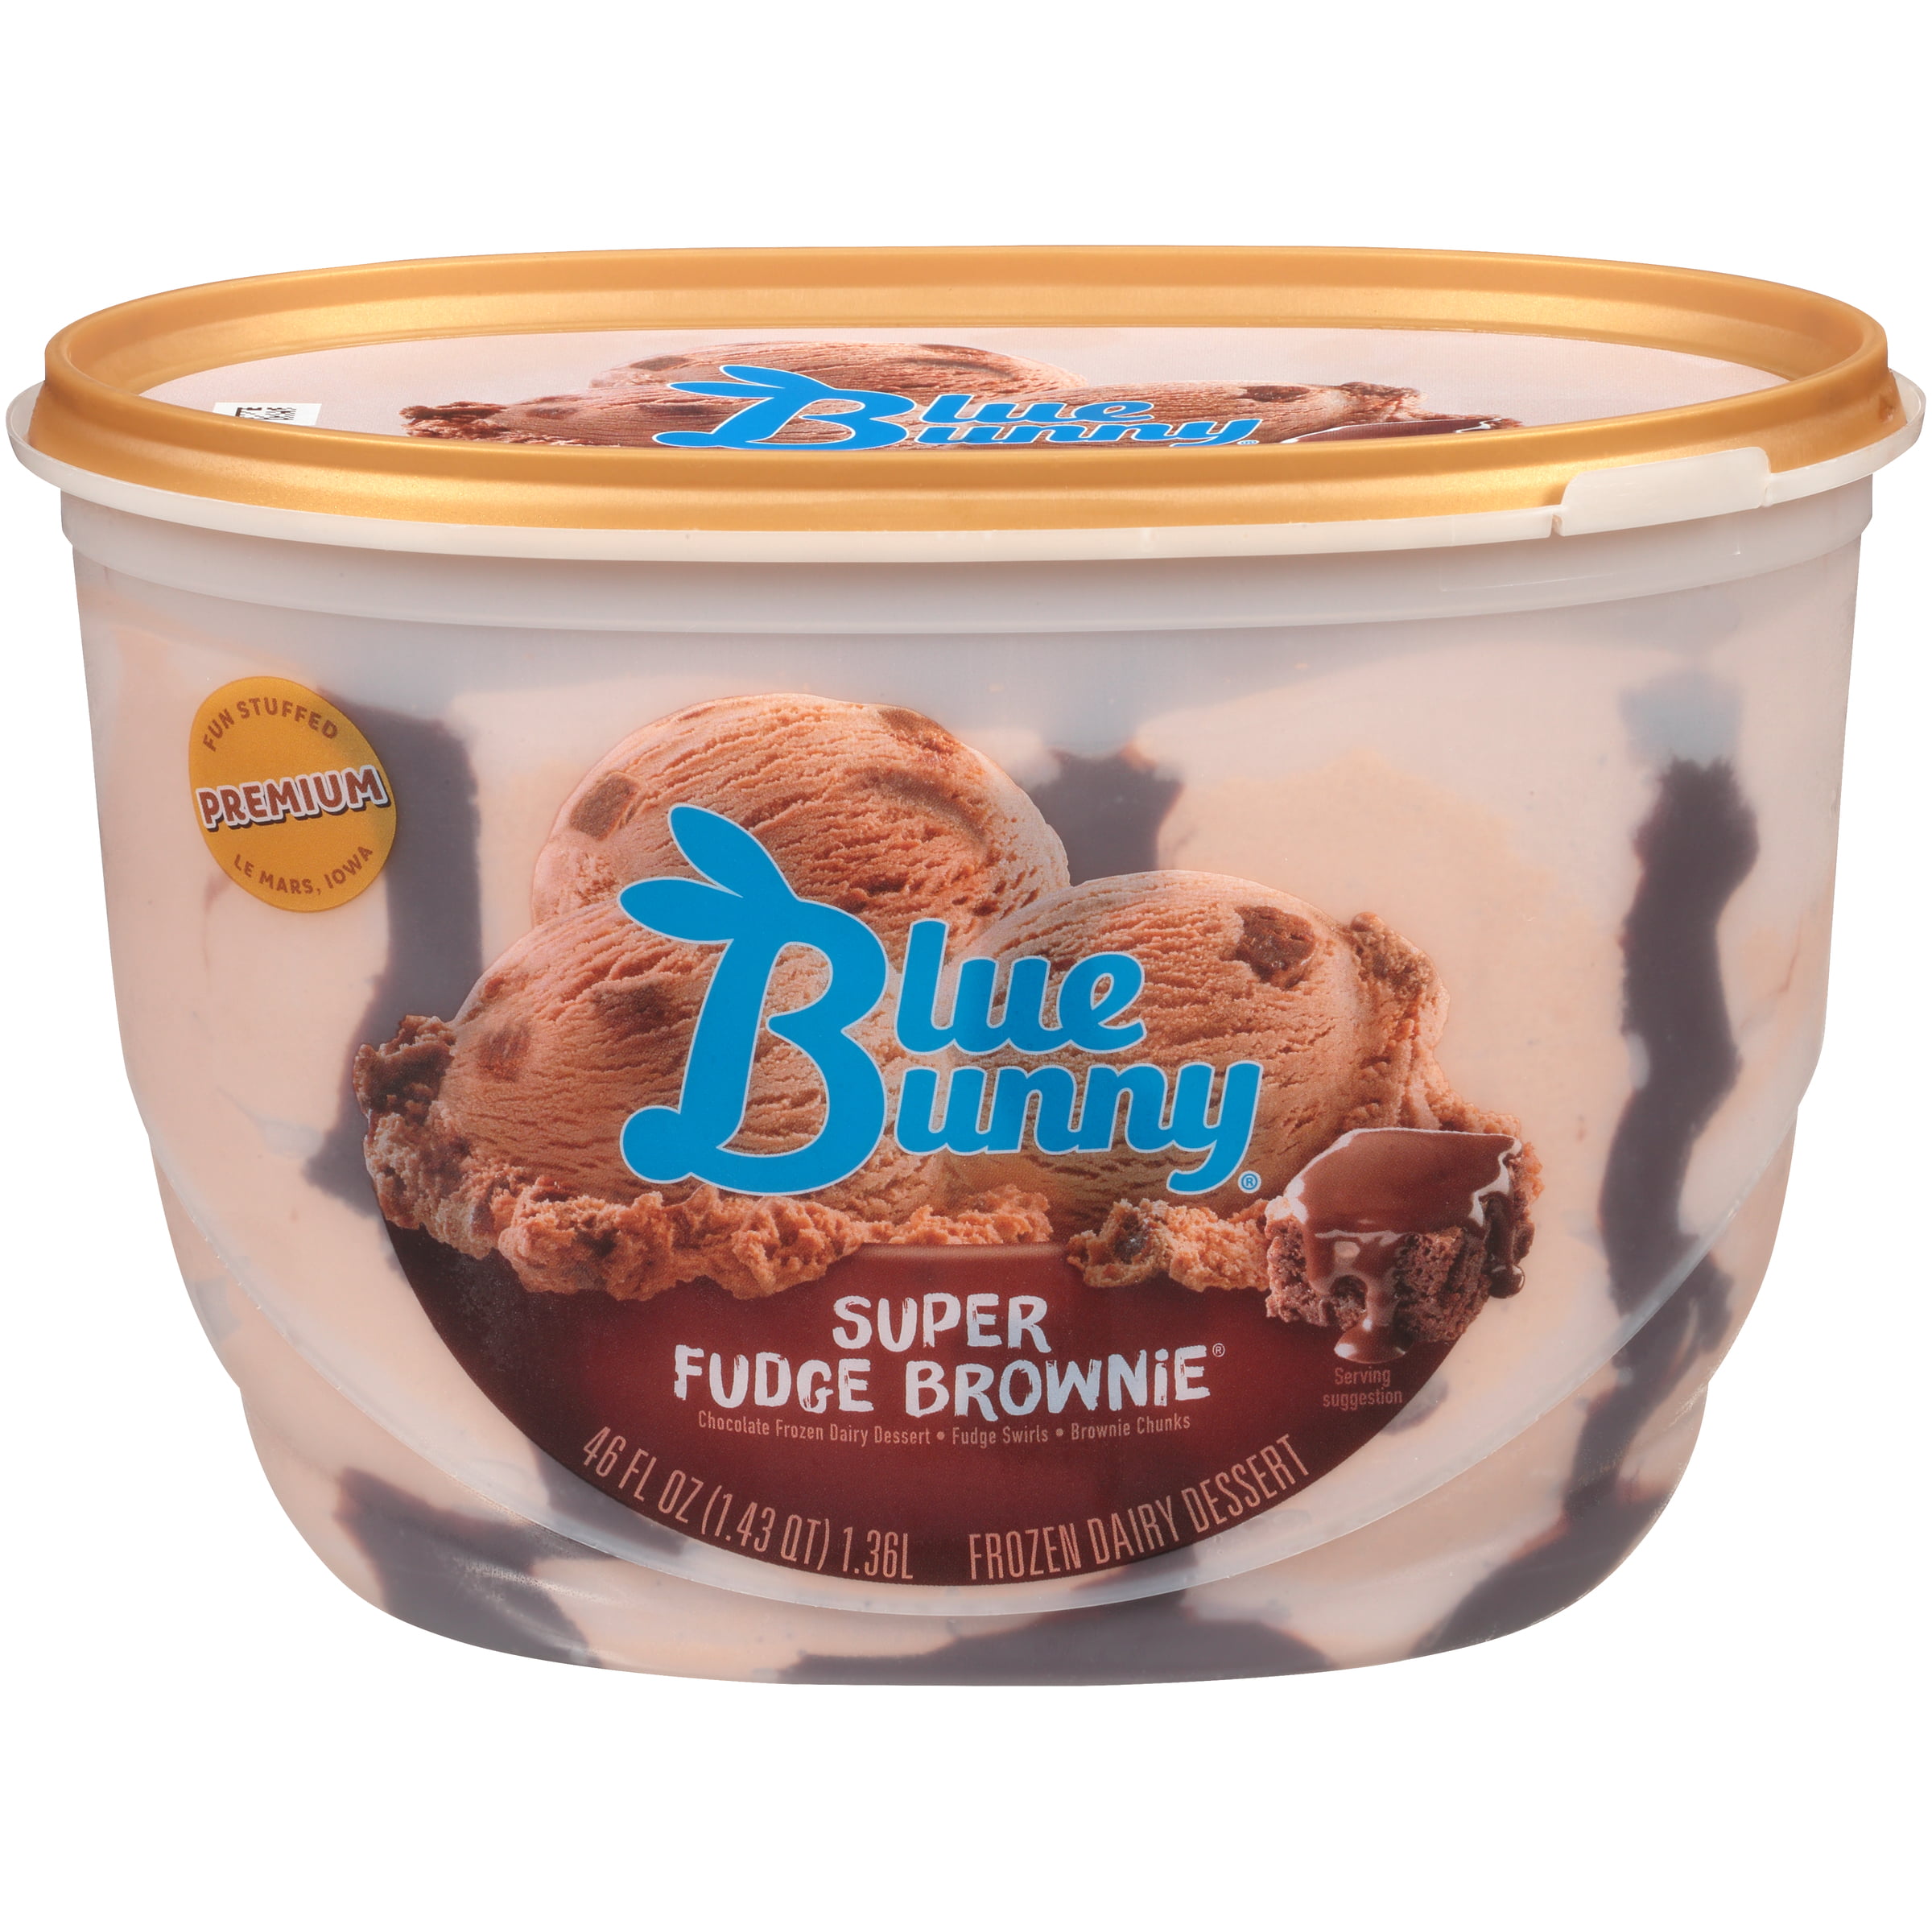 Blue Bunny Super Fudge Brownie Frozen Dessert, 46 fl oz - Walmart.com